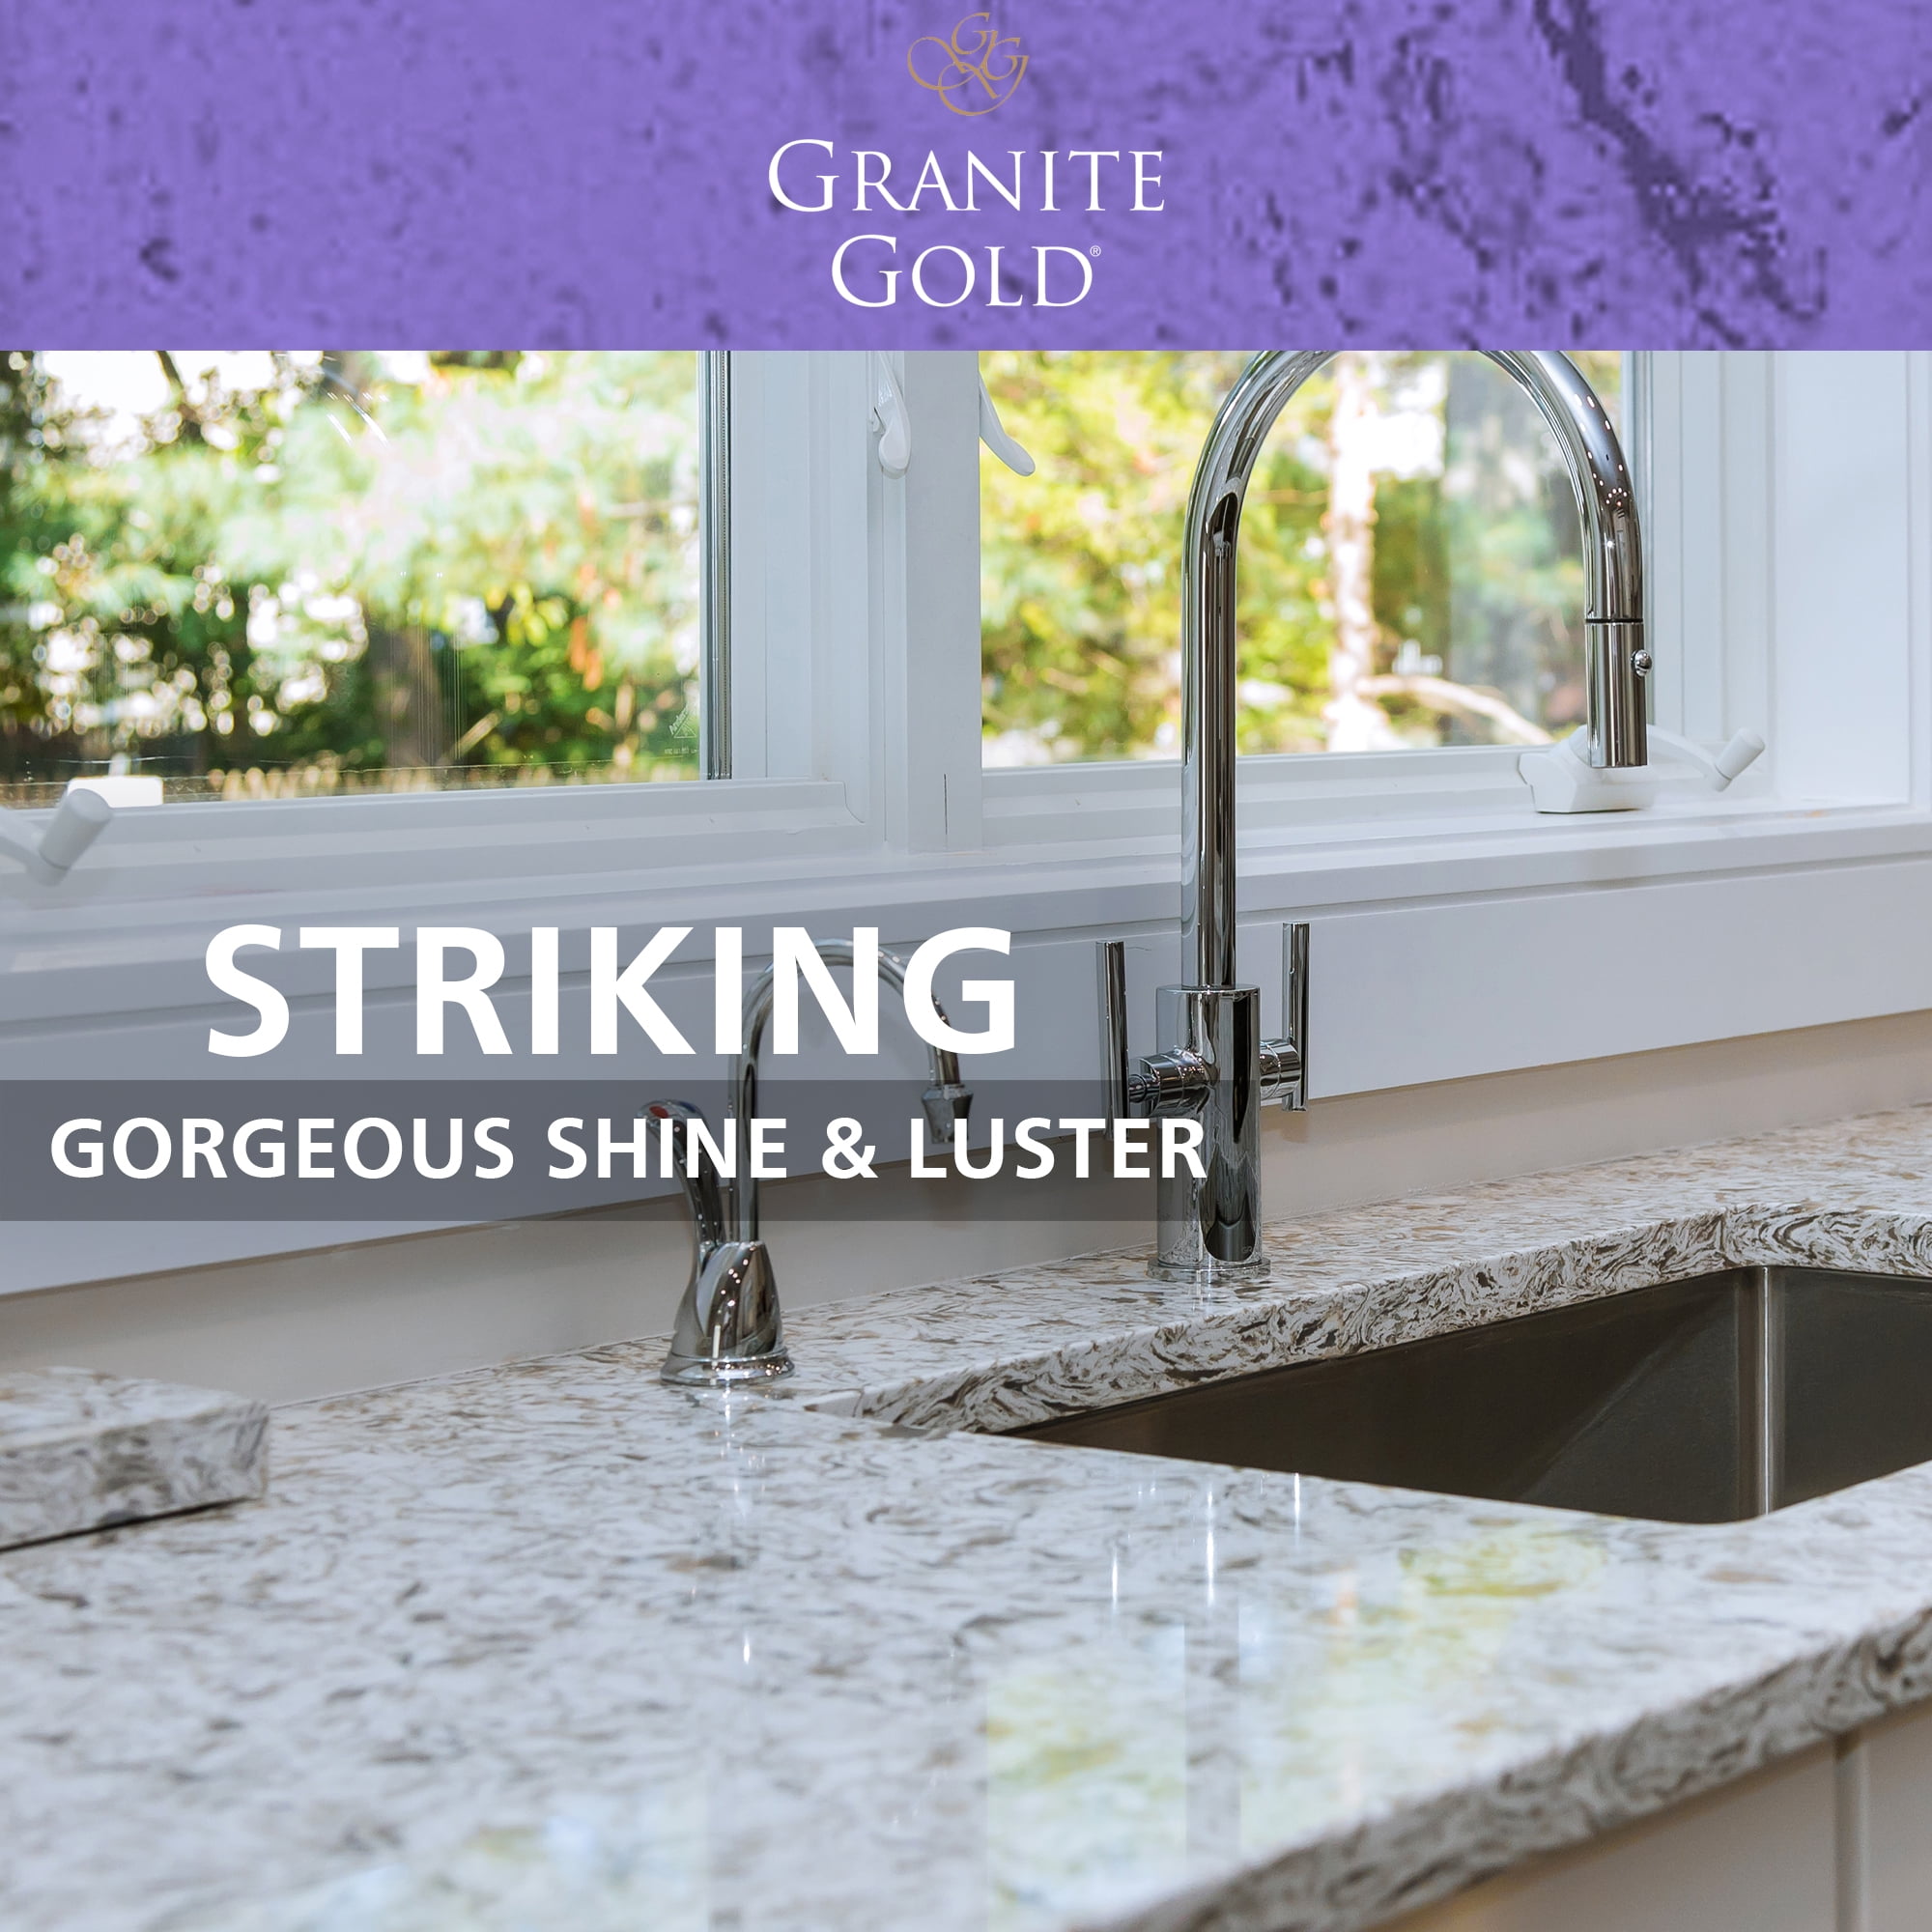 Granite Gold Specialty Cleaner - 24 fl oz